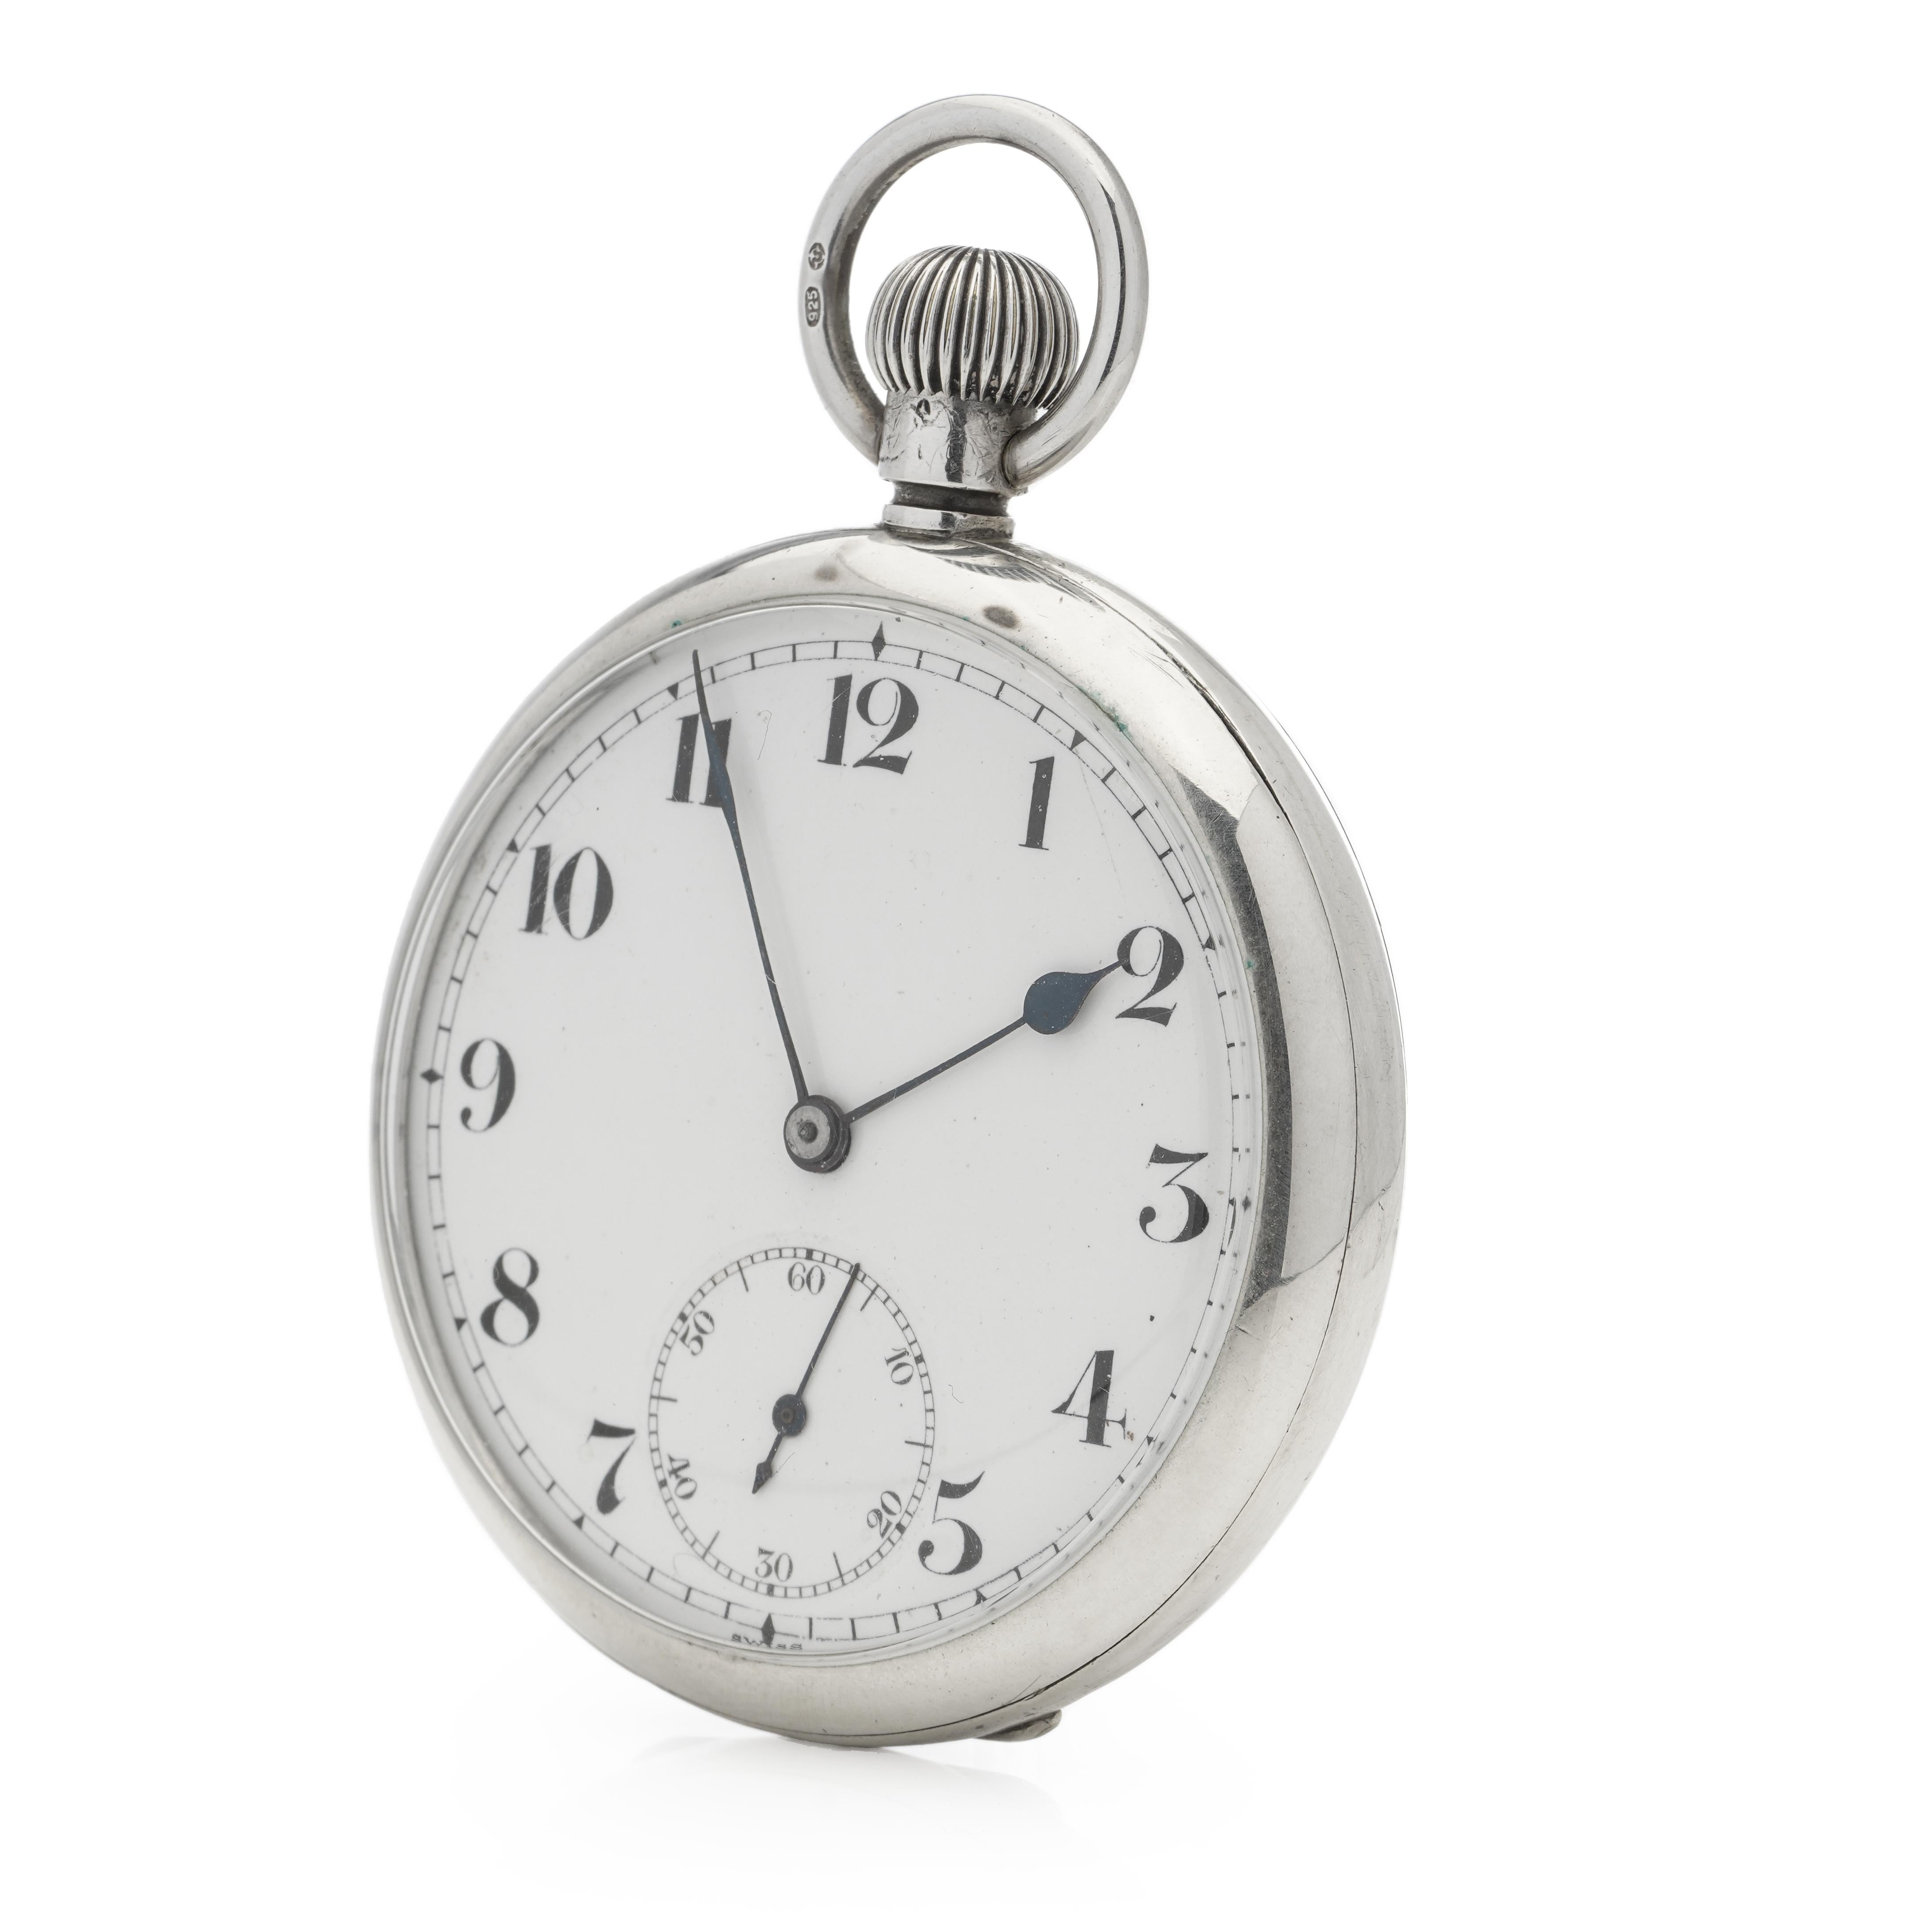 Wilsdorf & Davis 'Early Rolex' Sterling 925 Silver Round Pocket Watch In Good Condition For Sale In Braintree, GB